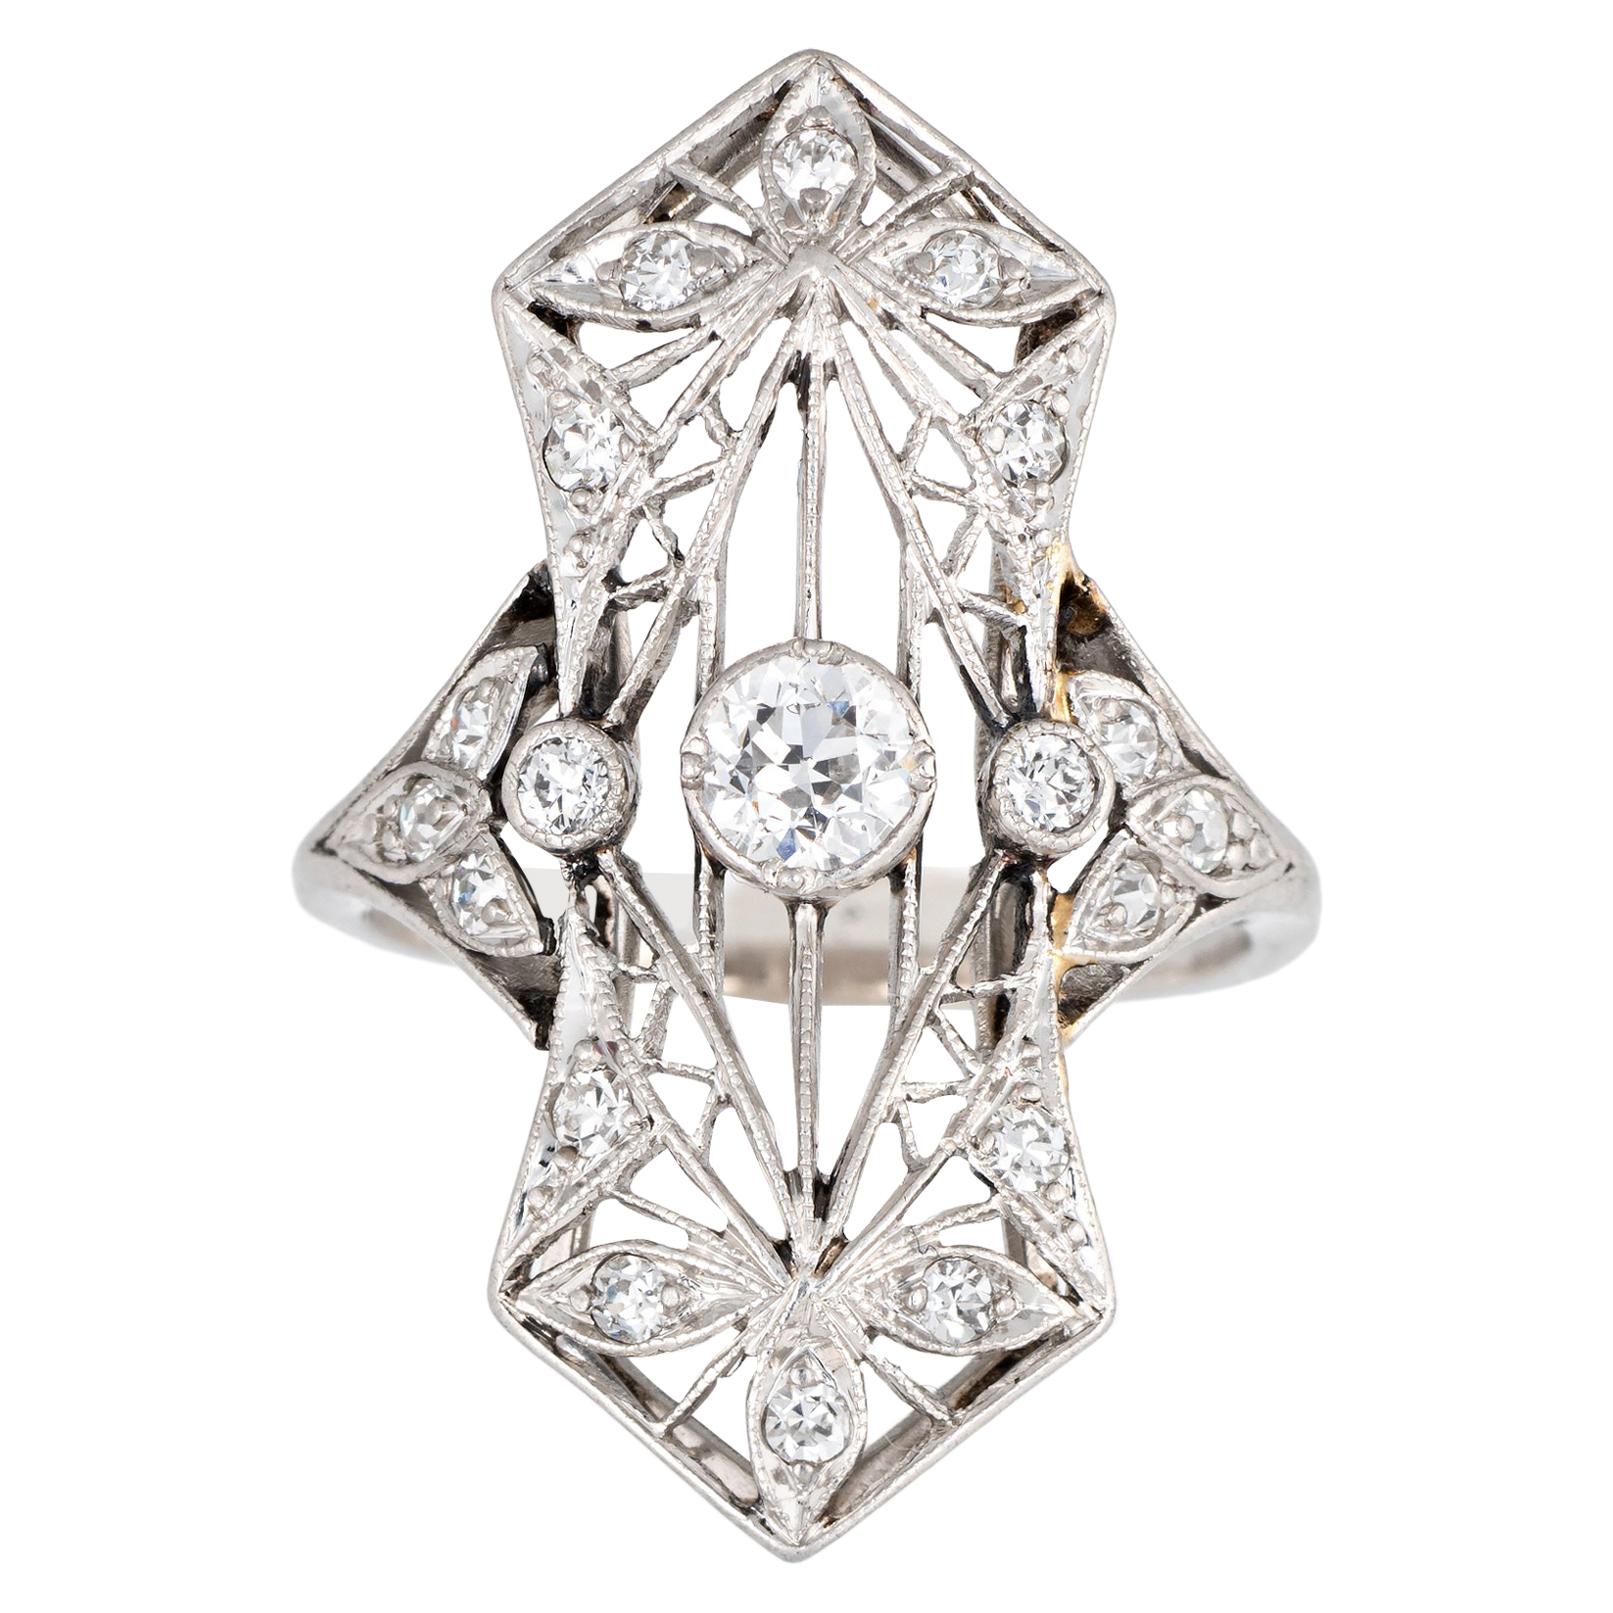 Antique Edwardian Diamond Ring Platinum Flower Design Vintage Plaque Jewelry